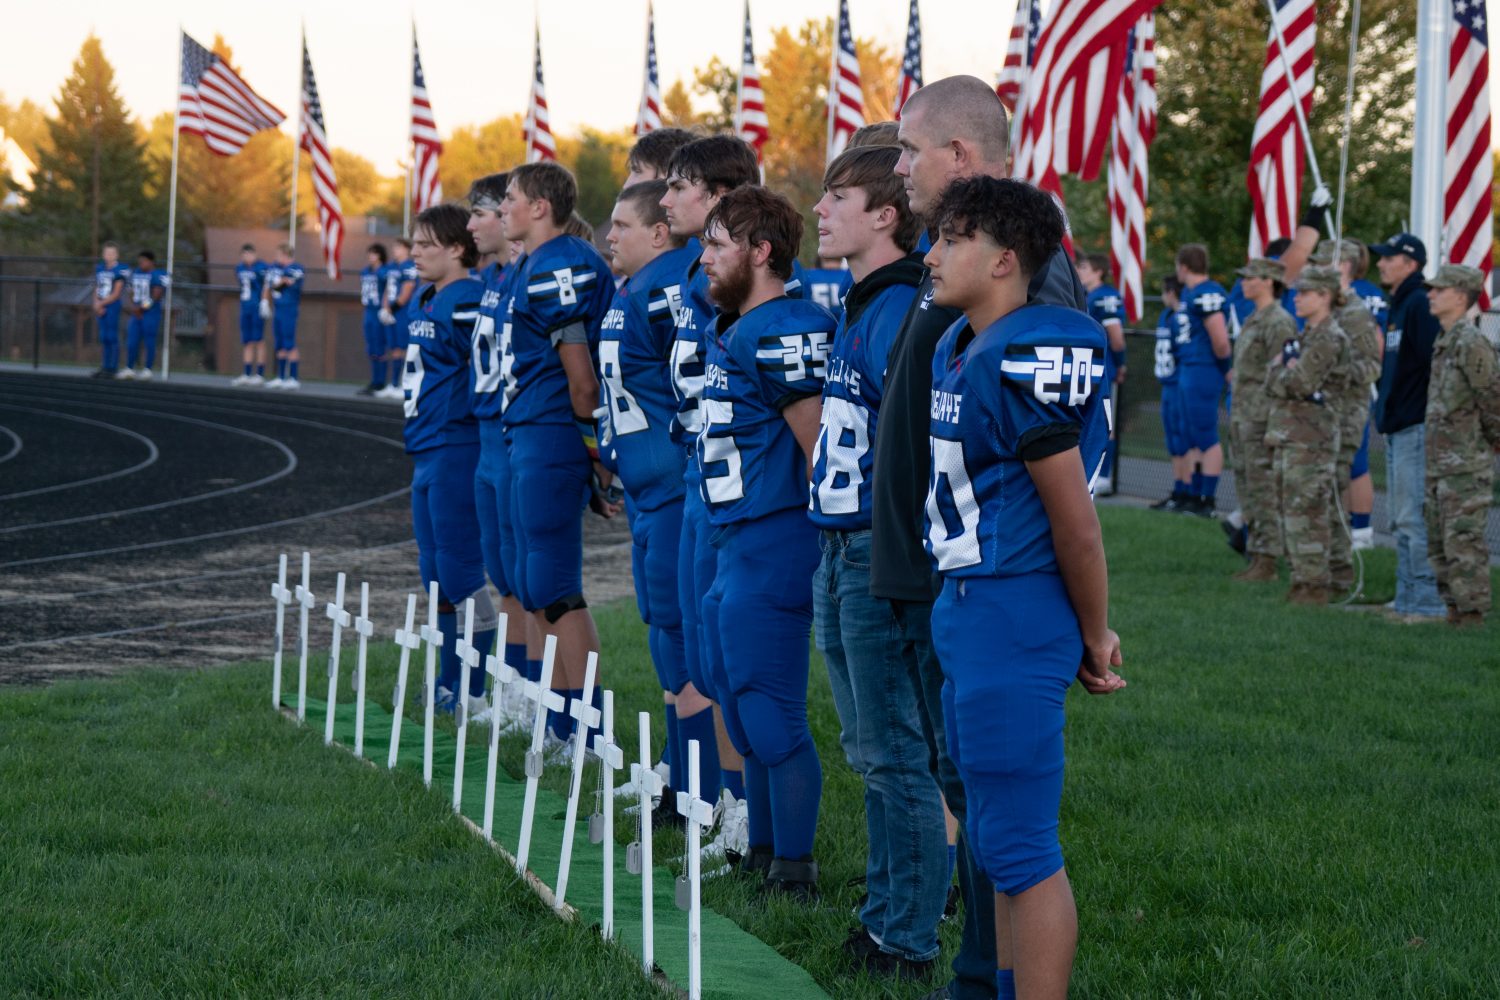 MHS Football Team honors U.S. Military Heroes who died Aug. 26